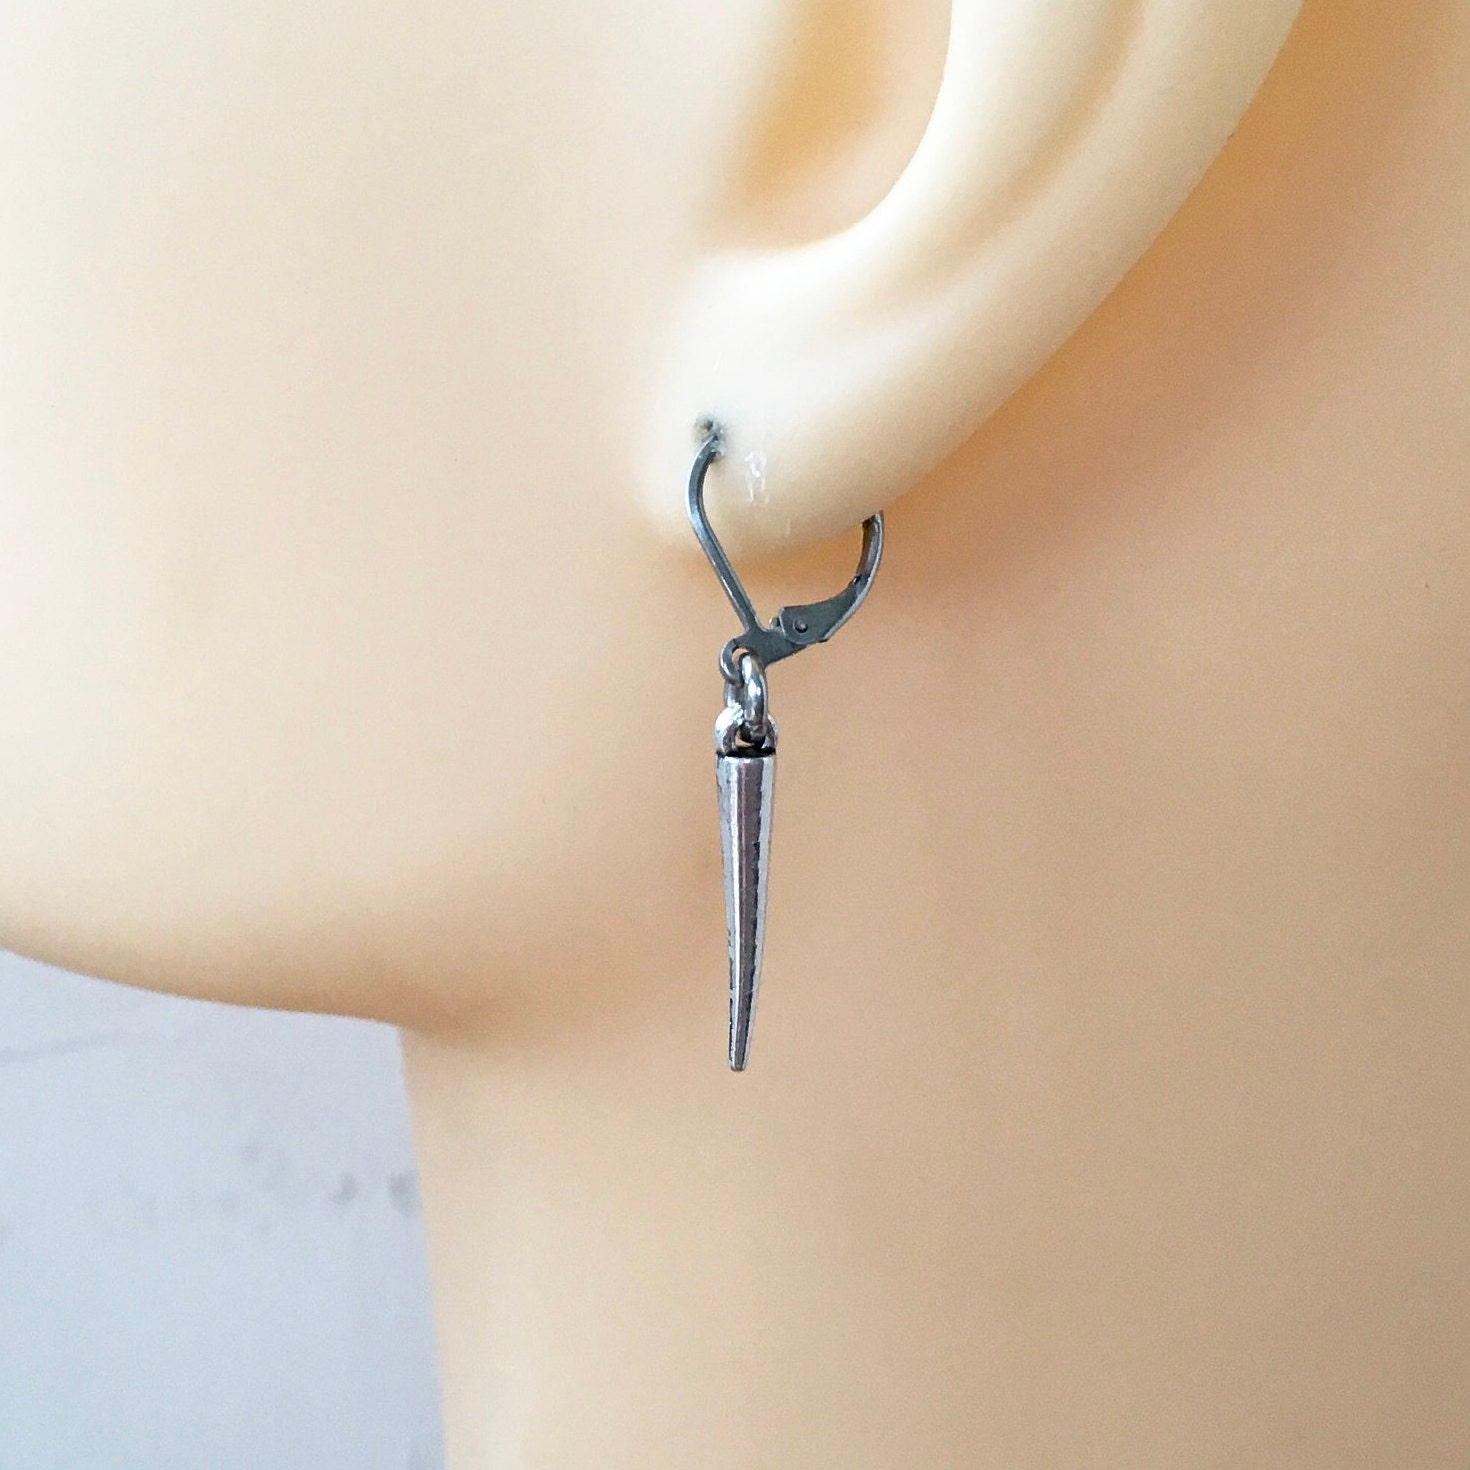 Spike earring, one single earring or a pair of earrings, spiked jewellery